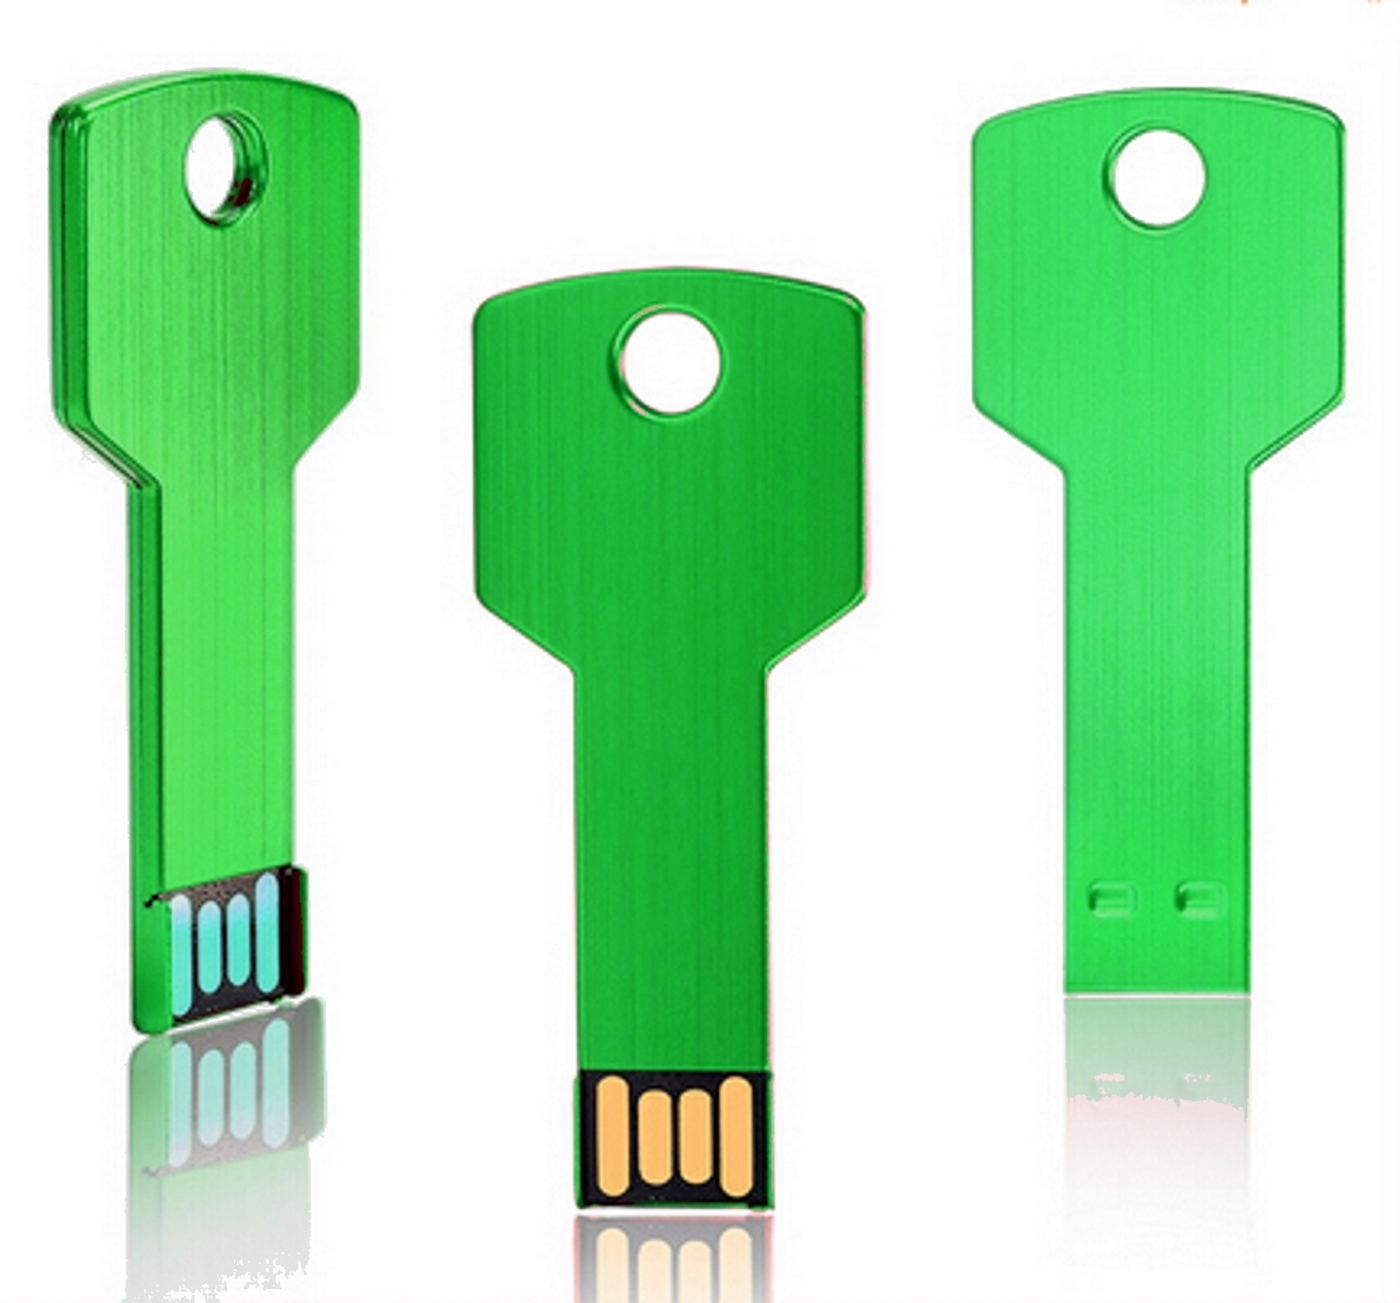 GB) Key Grün (Grün, USB USB-Stick 2GB 2 GERMANY